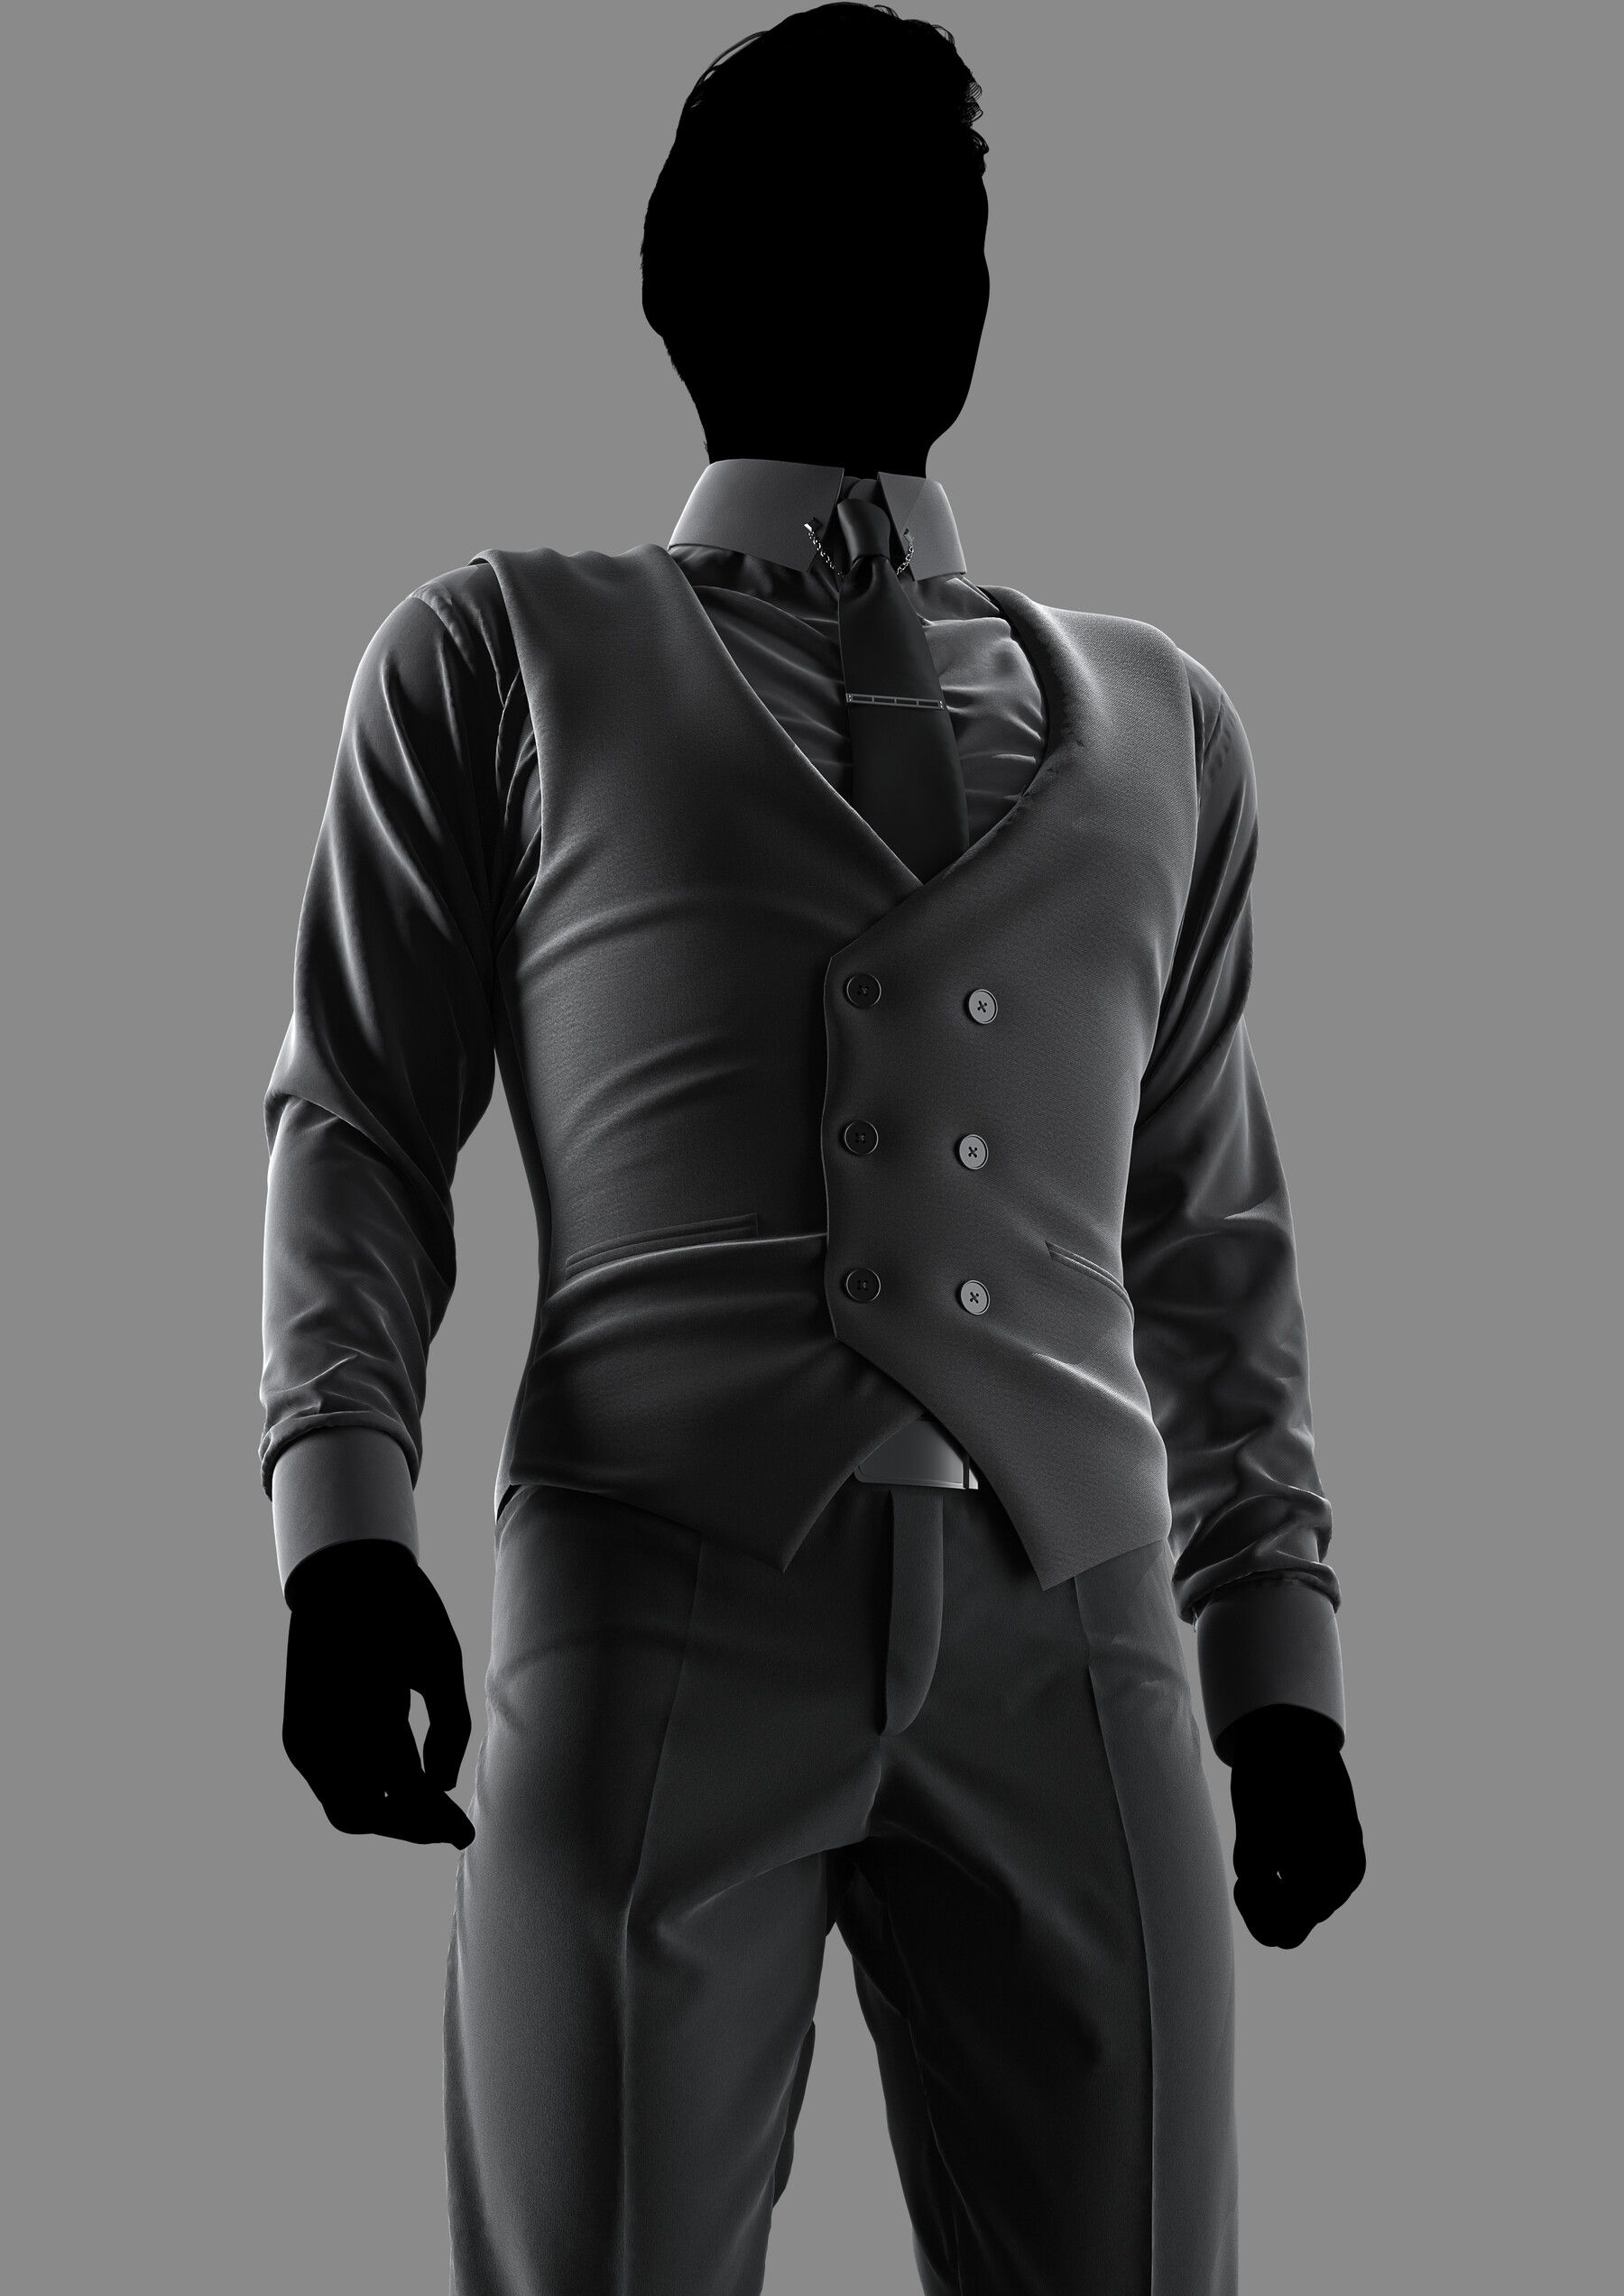 ArtStation - Tutorial MD/Clo3D - Realistic Man Suit | Tutorials